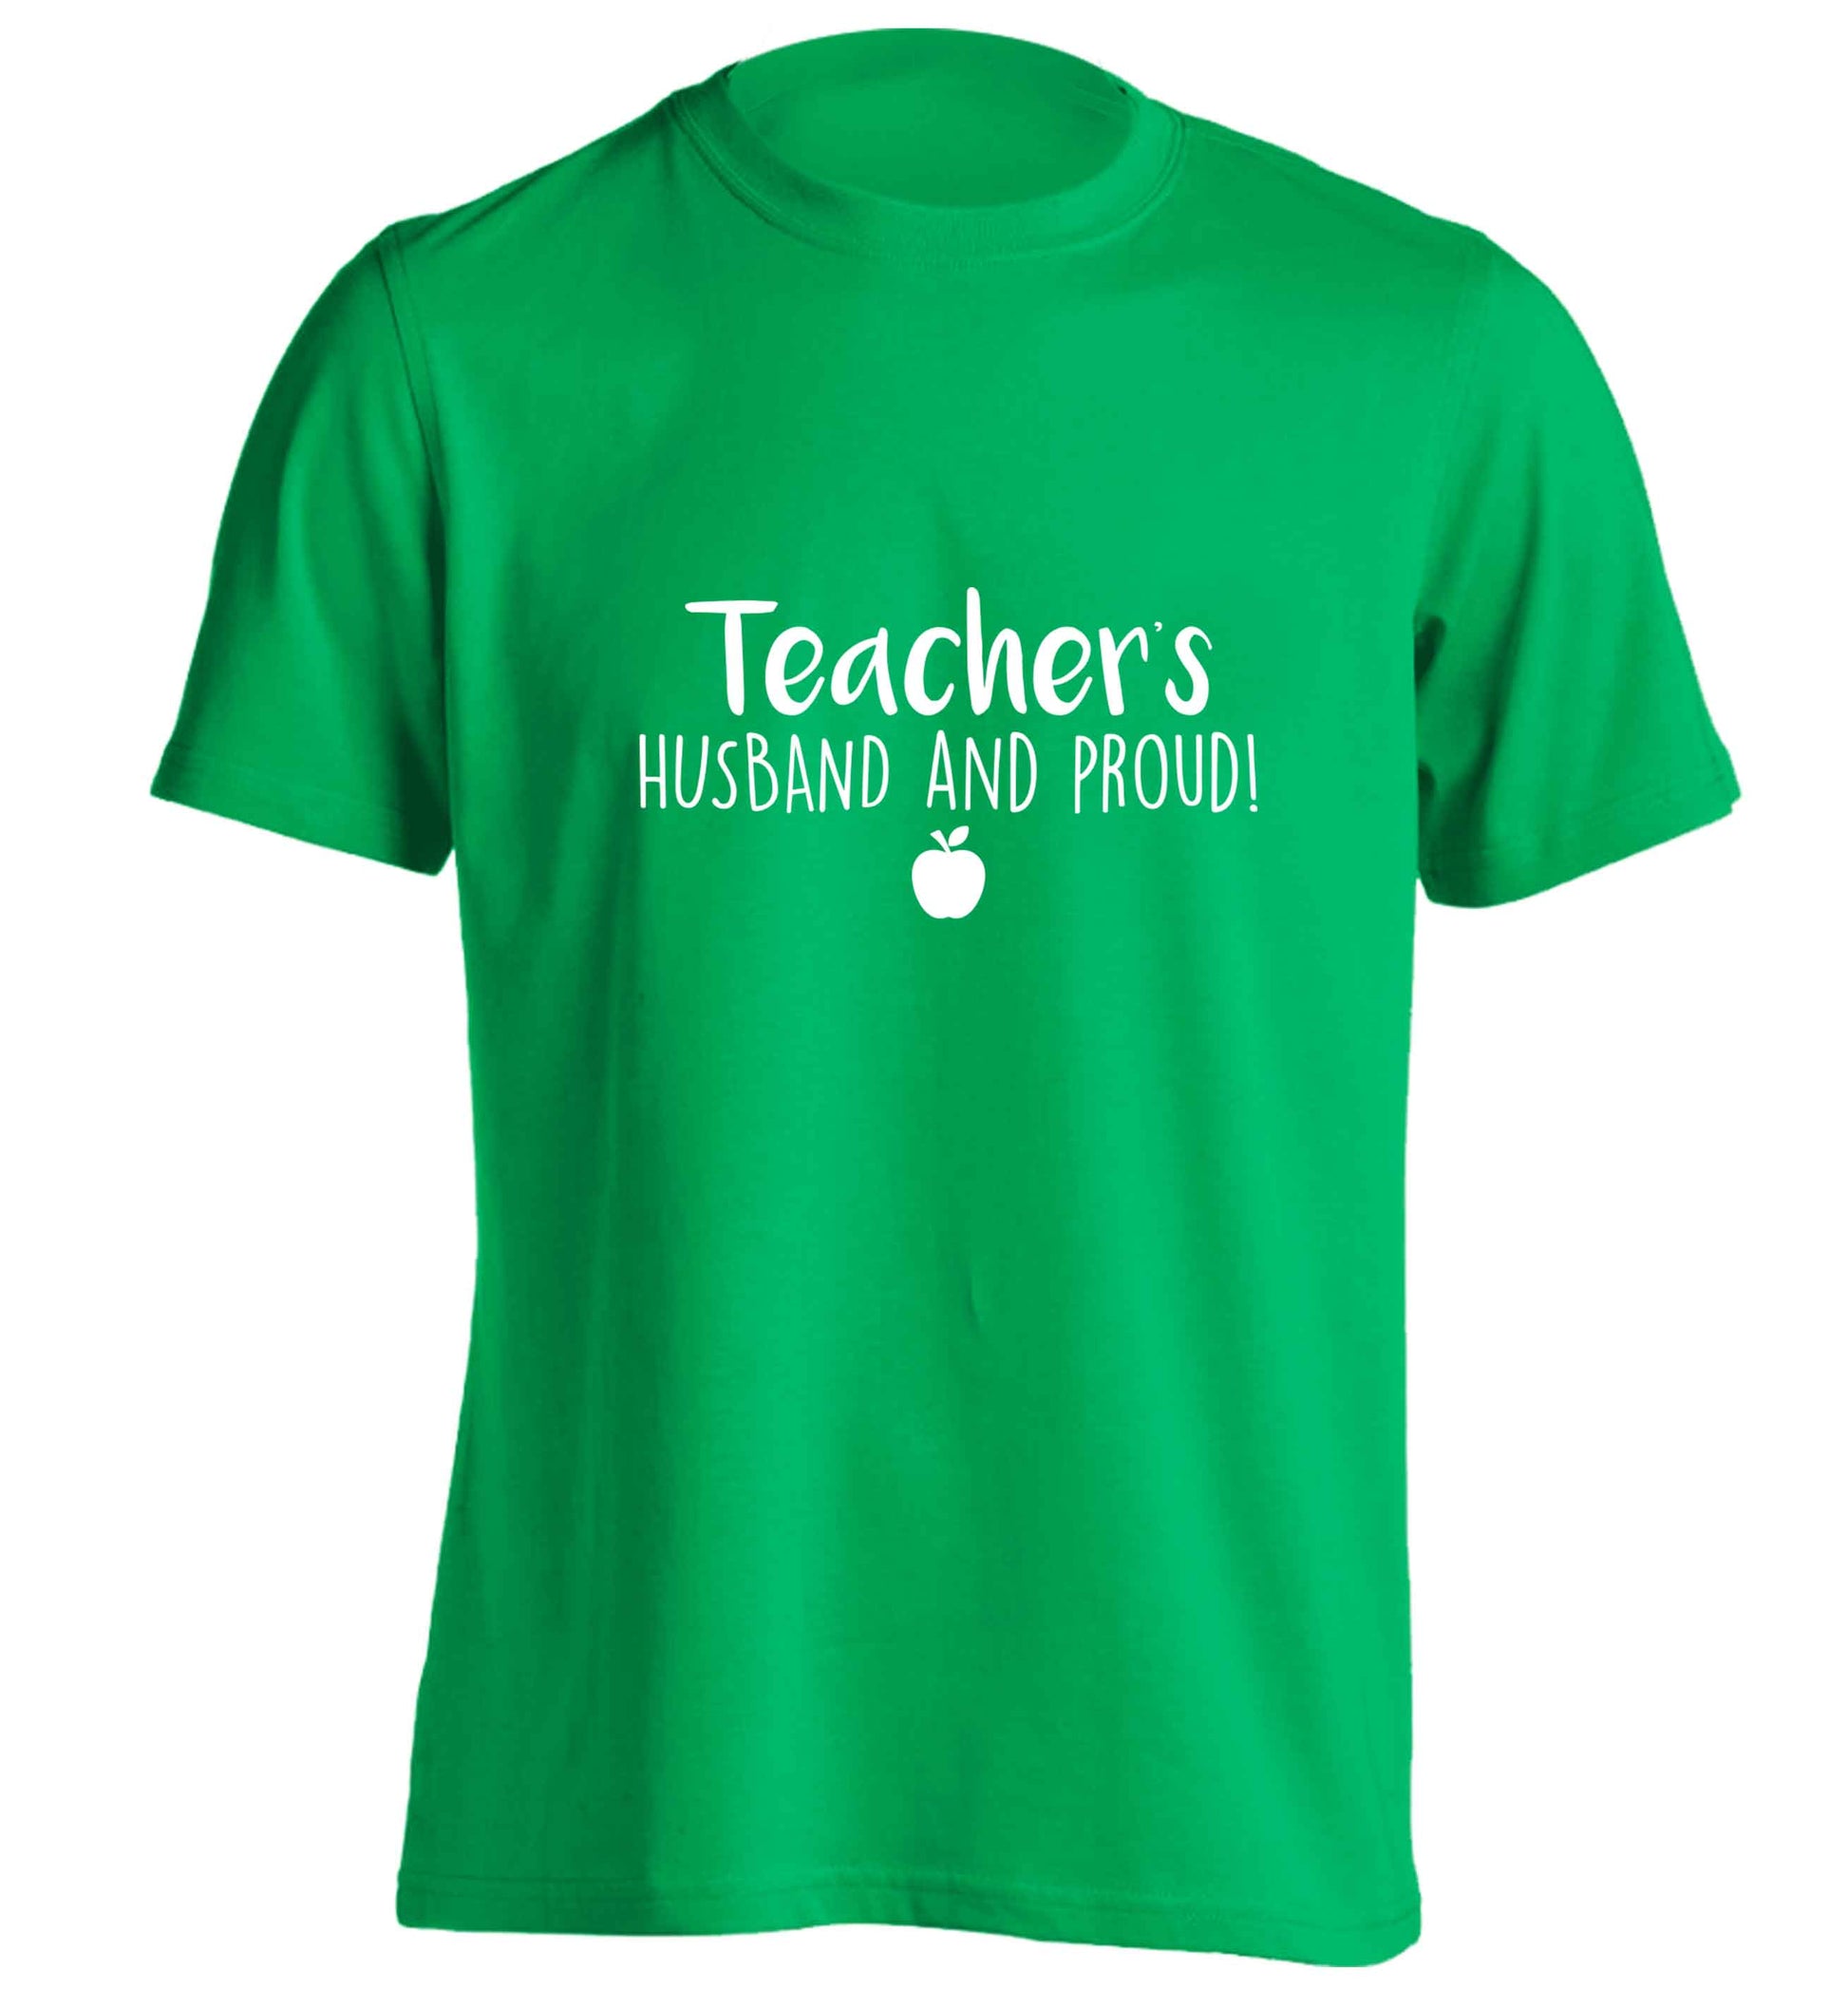 Teachers husband and proud adults unisex green Tshirt 2XL